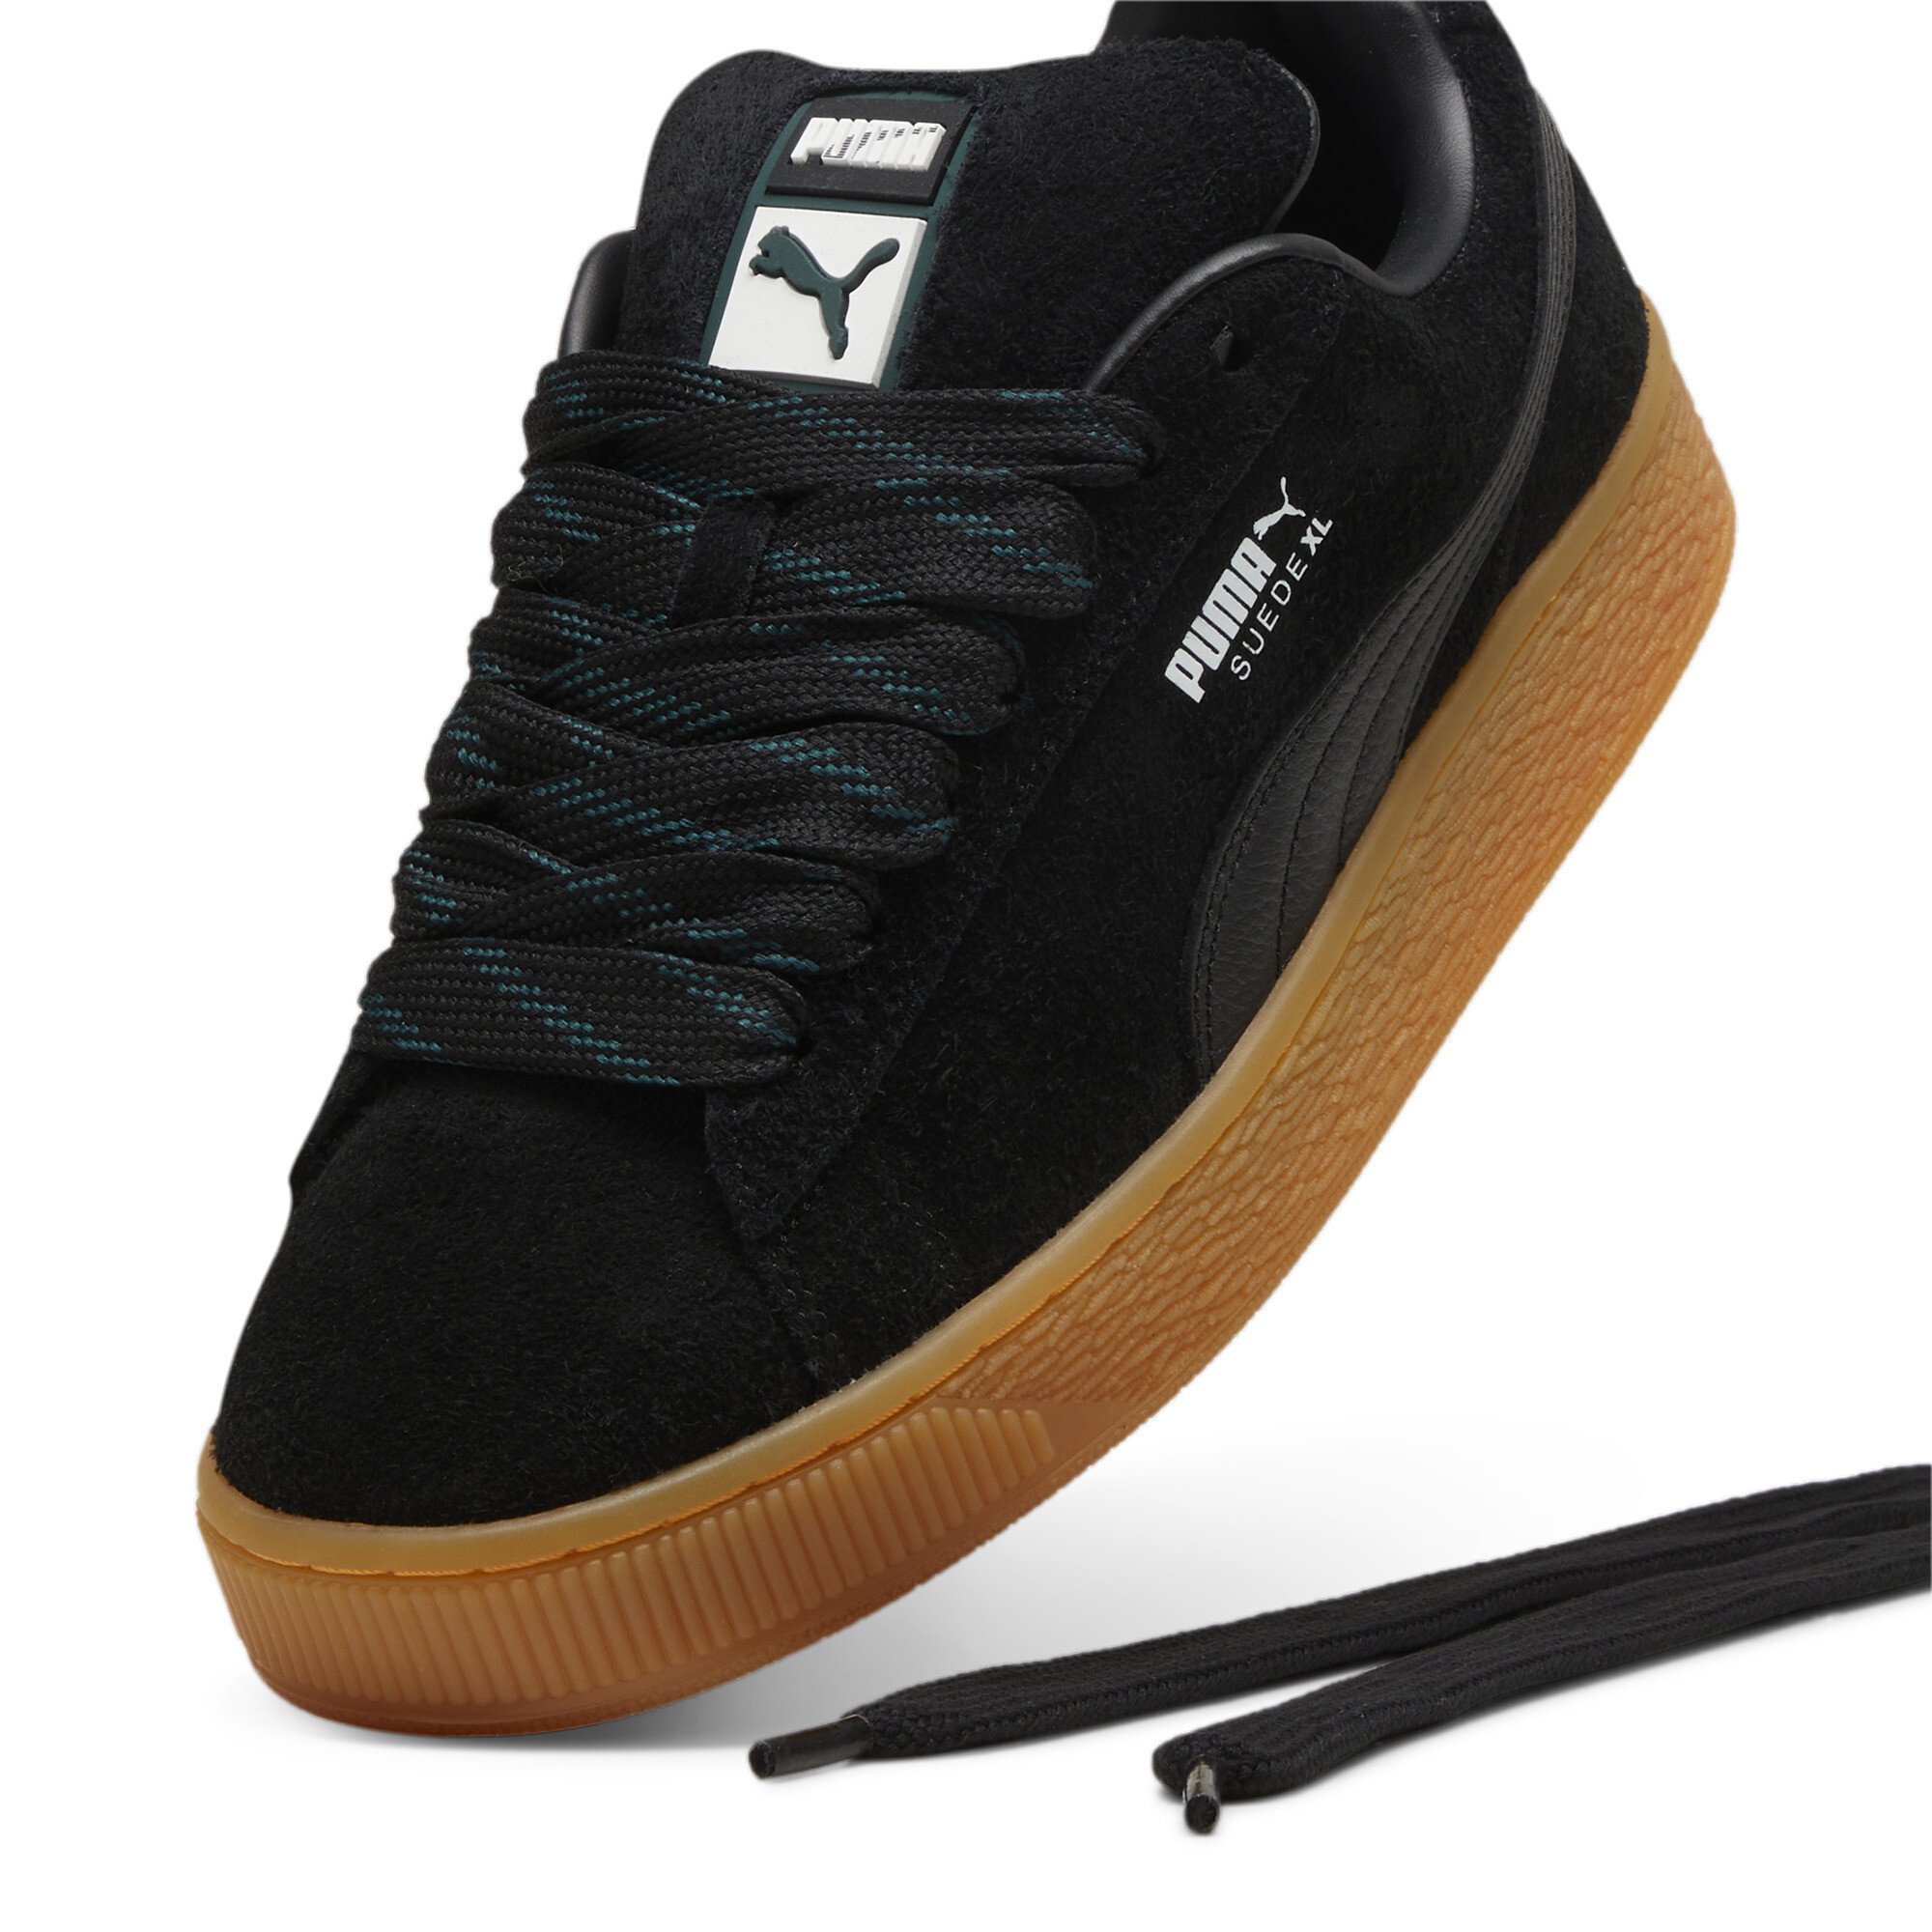 Puma Suede XL Flecked Unisex, Black, Size 40.5, Shoes